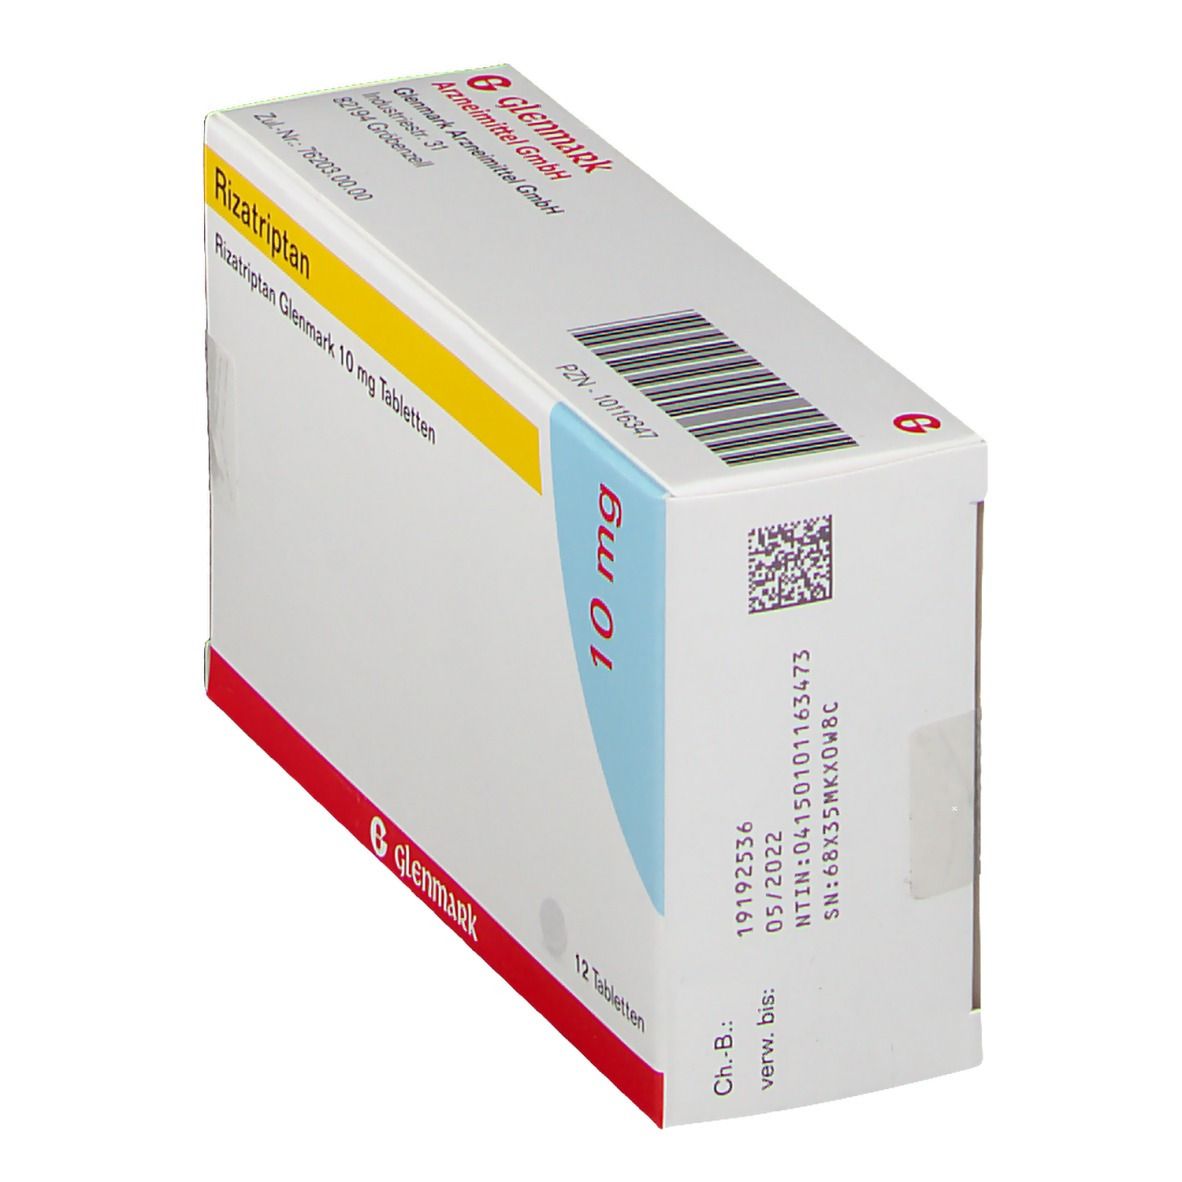 Rizatriptan Glenmark 10 mg